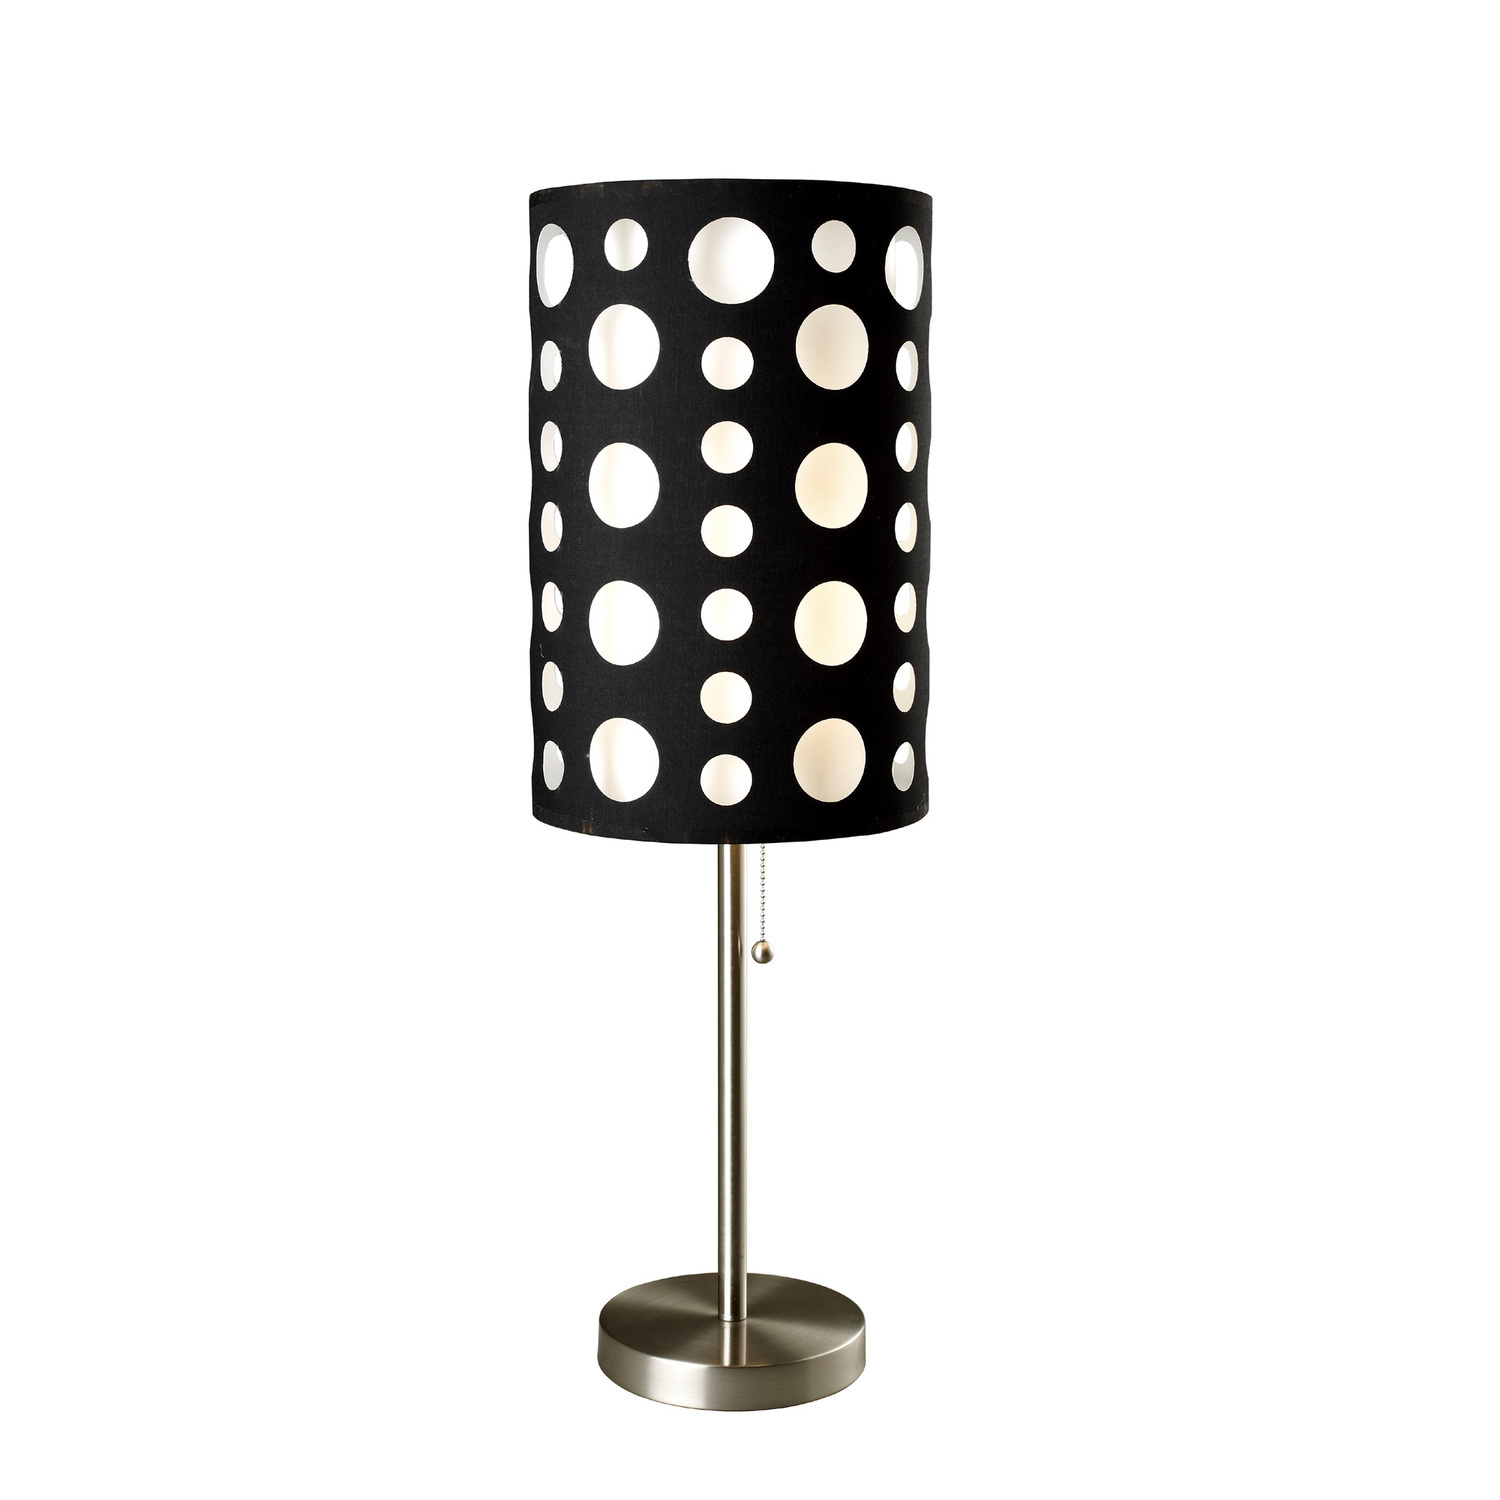 Ore International Inc. Modern Retro Table Lamp - image 1 of 2